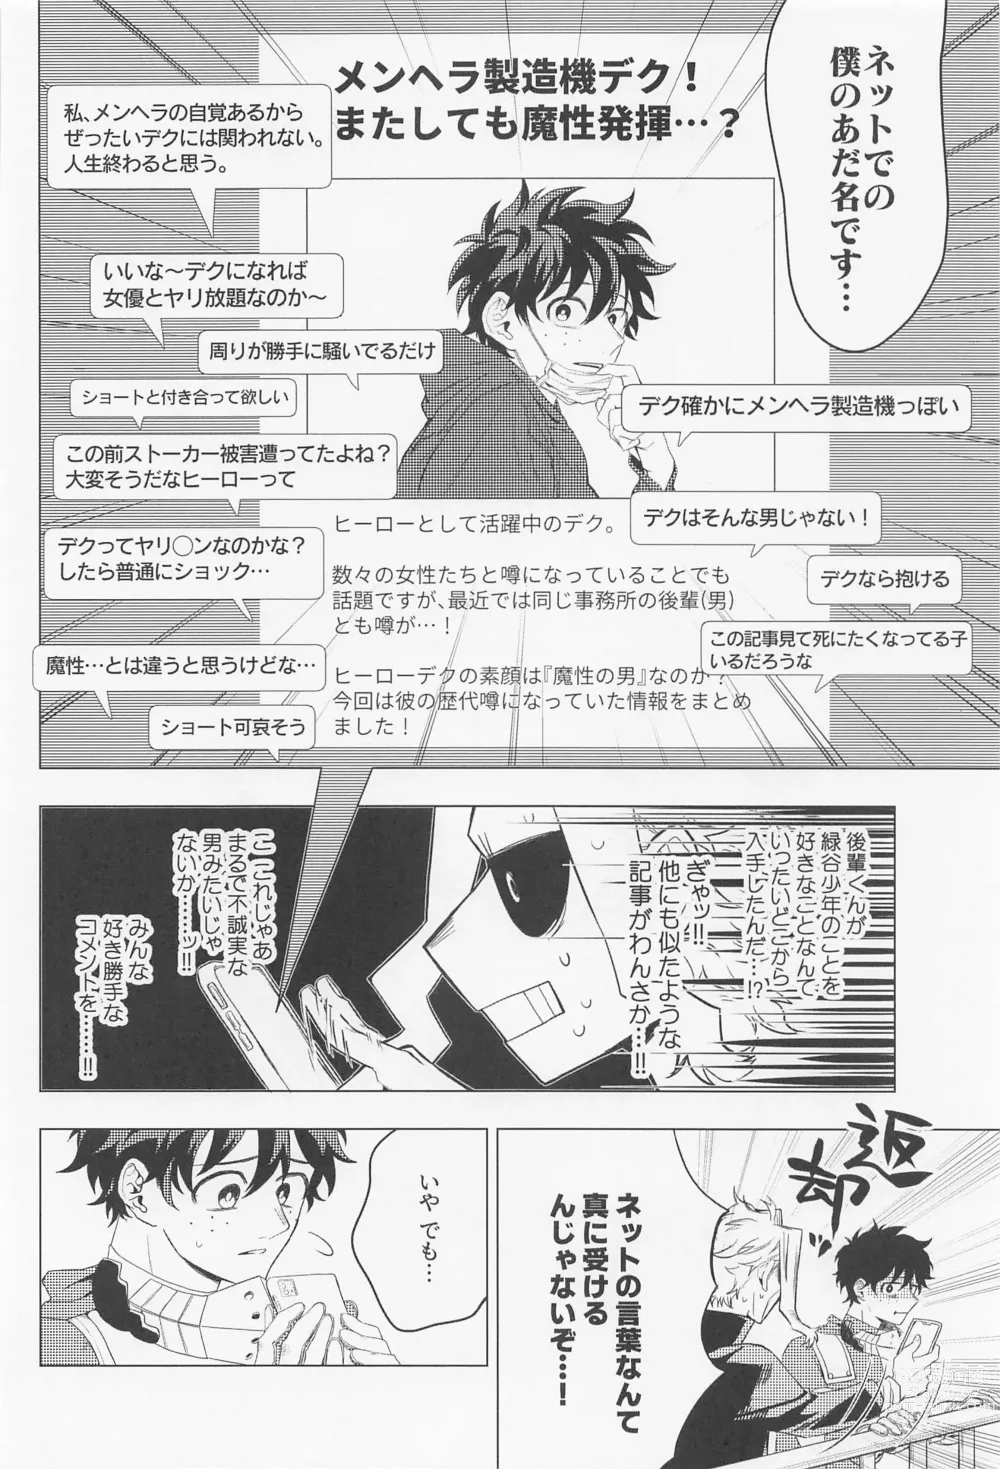 Page 9 of doujinshi Kuruwasete Junai